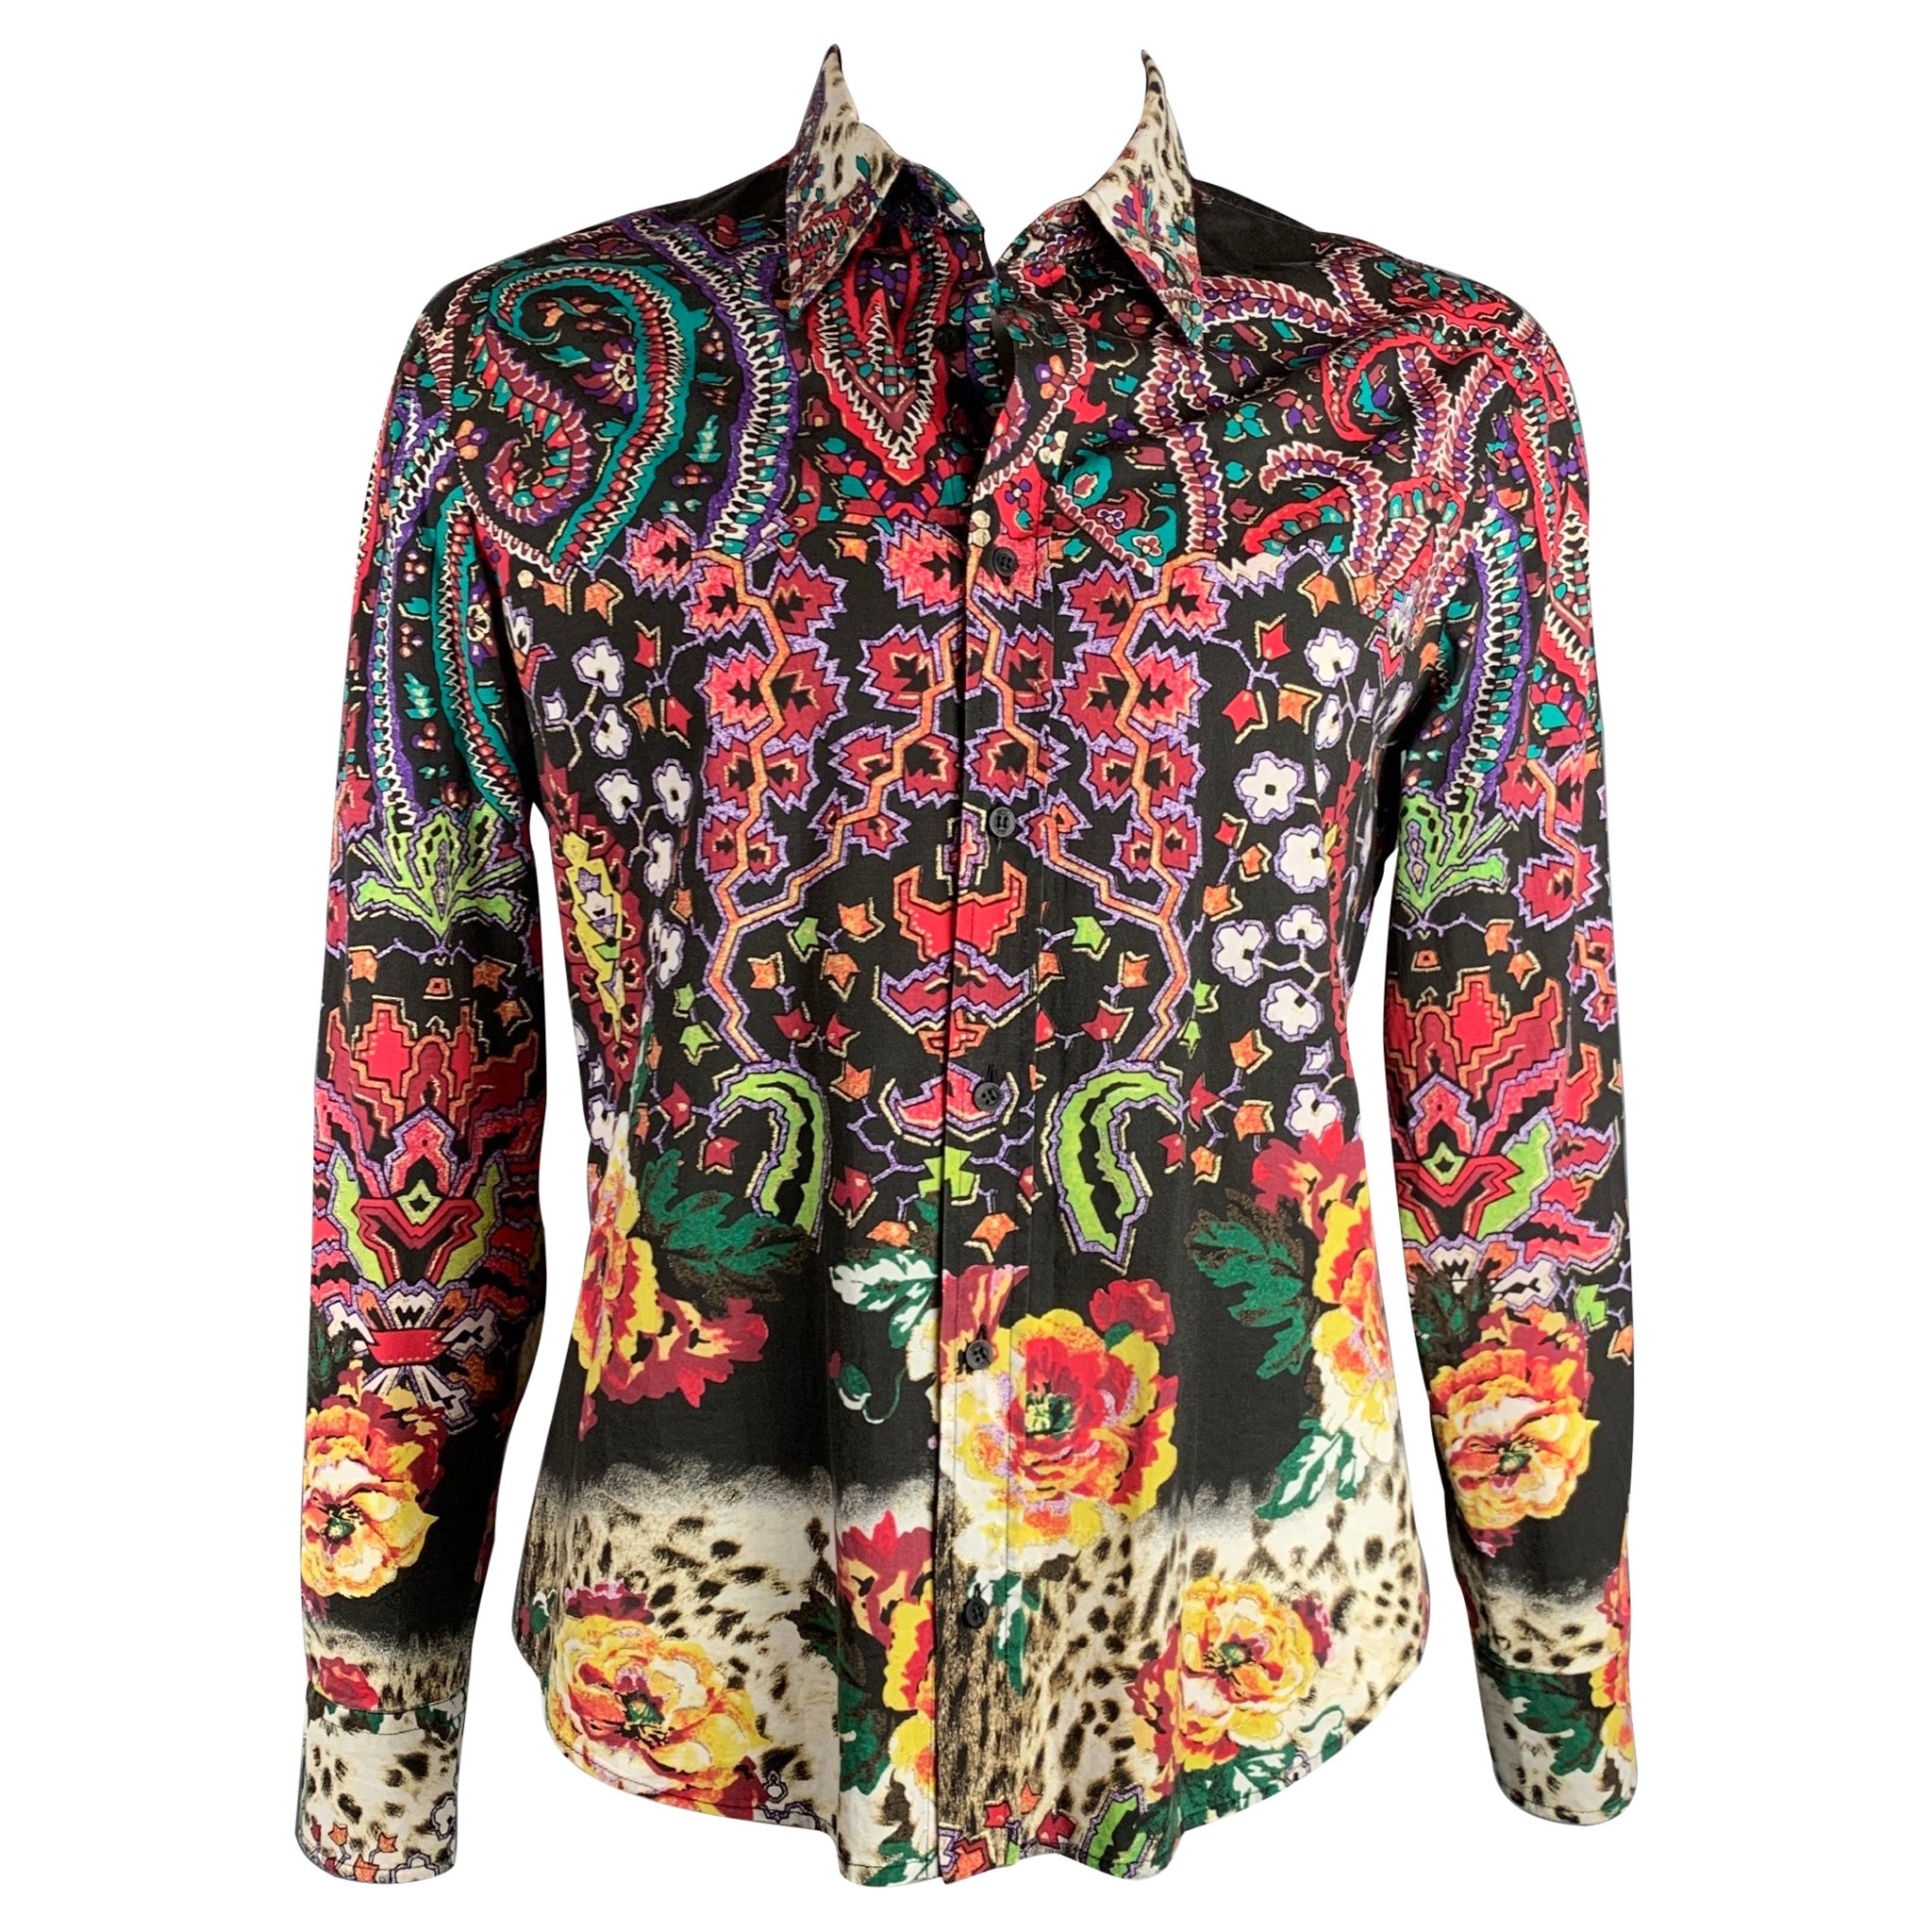 JUST CAVALLI Size XXL Multi-Color Print Cotton Blend Button Up Long Sleeve Shirt